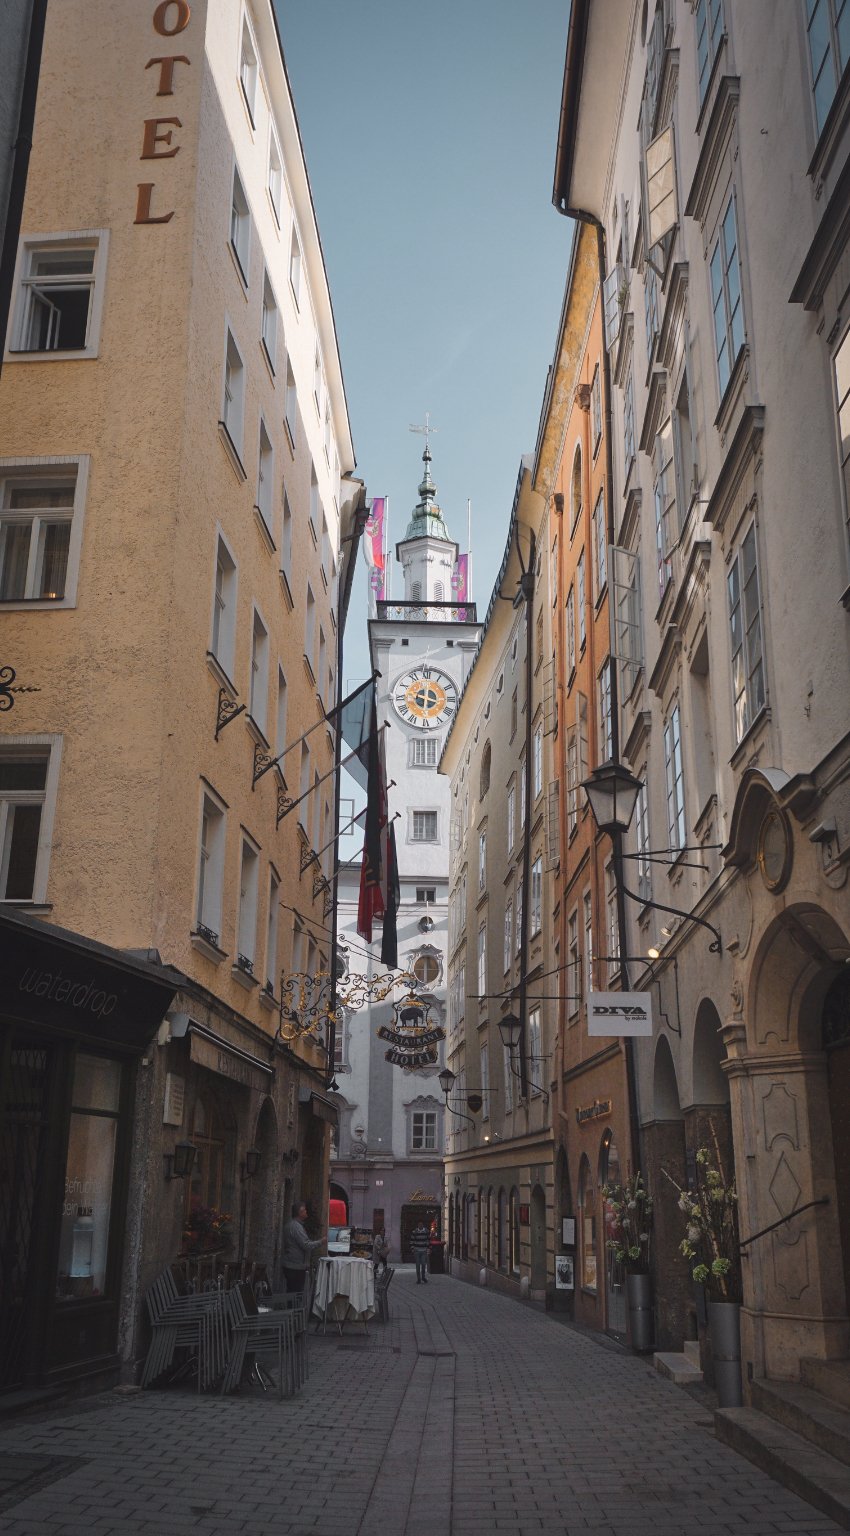 Altstadt - Old Town, Salzburg